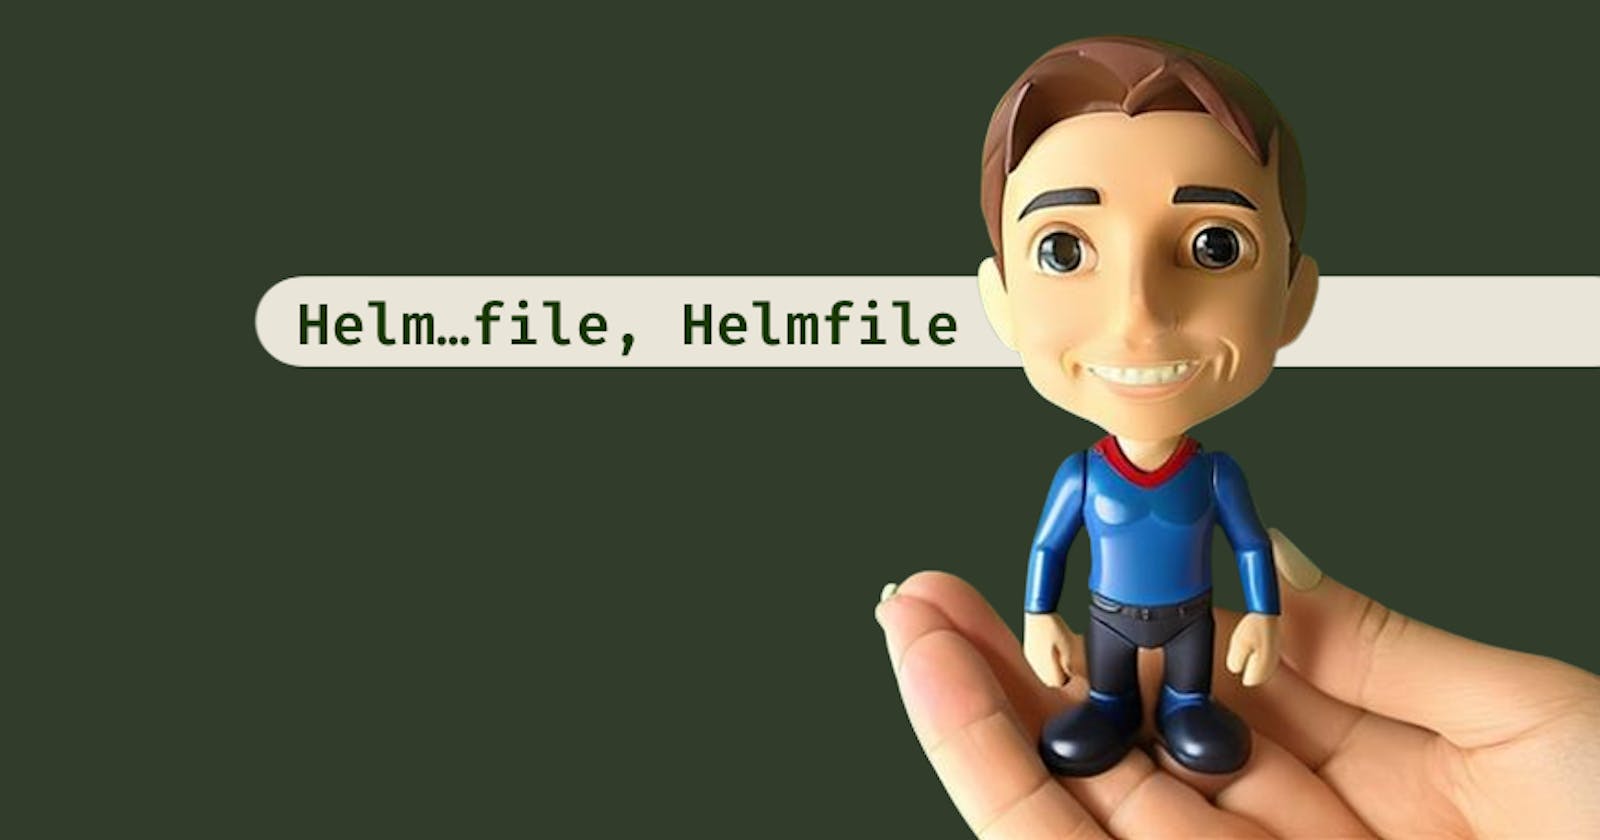 Helm + declaration + environments = Helmfile